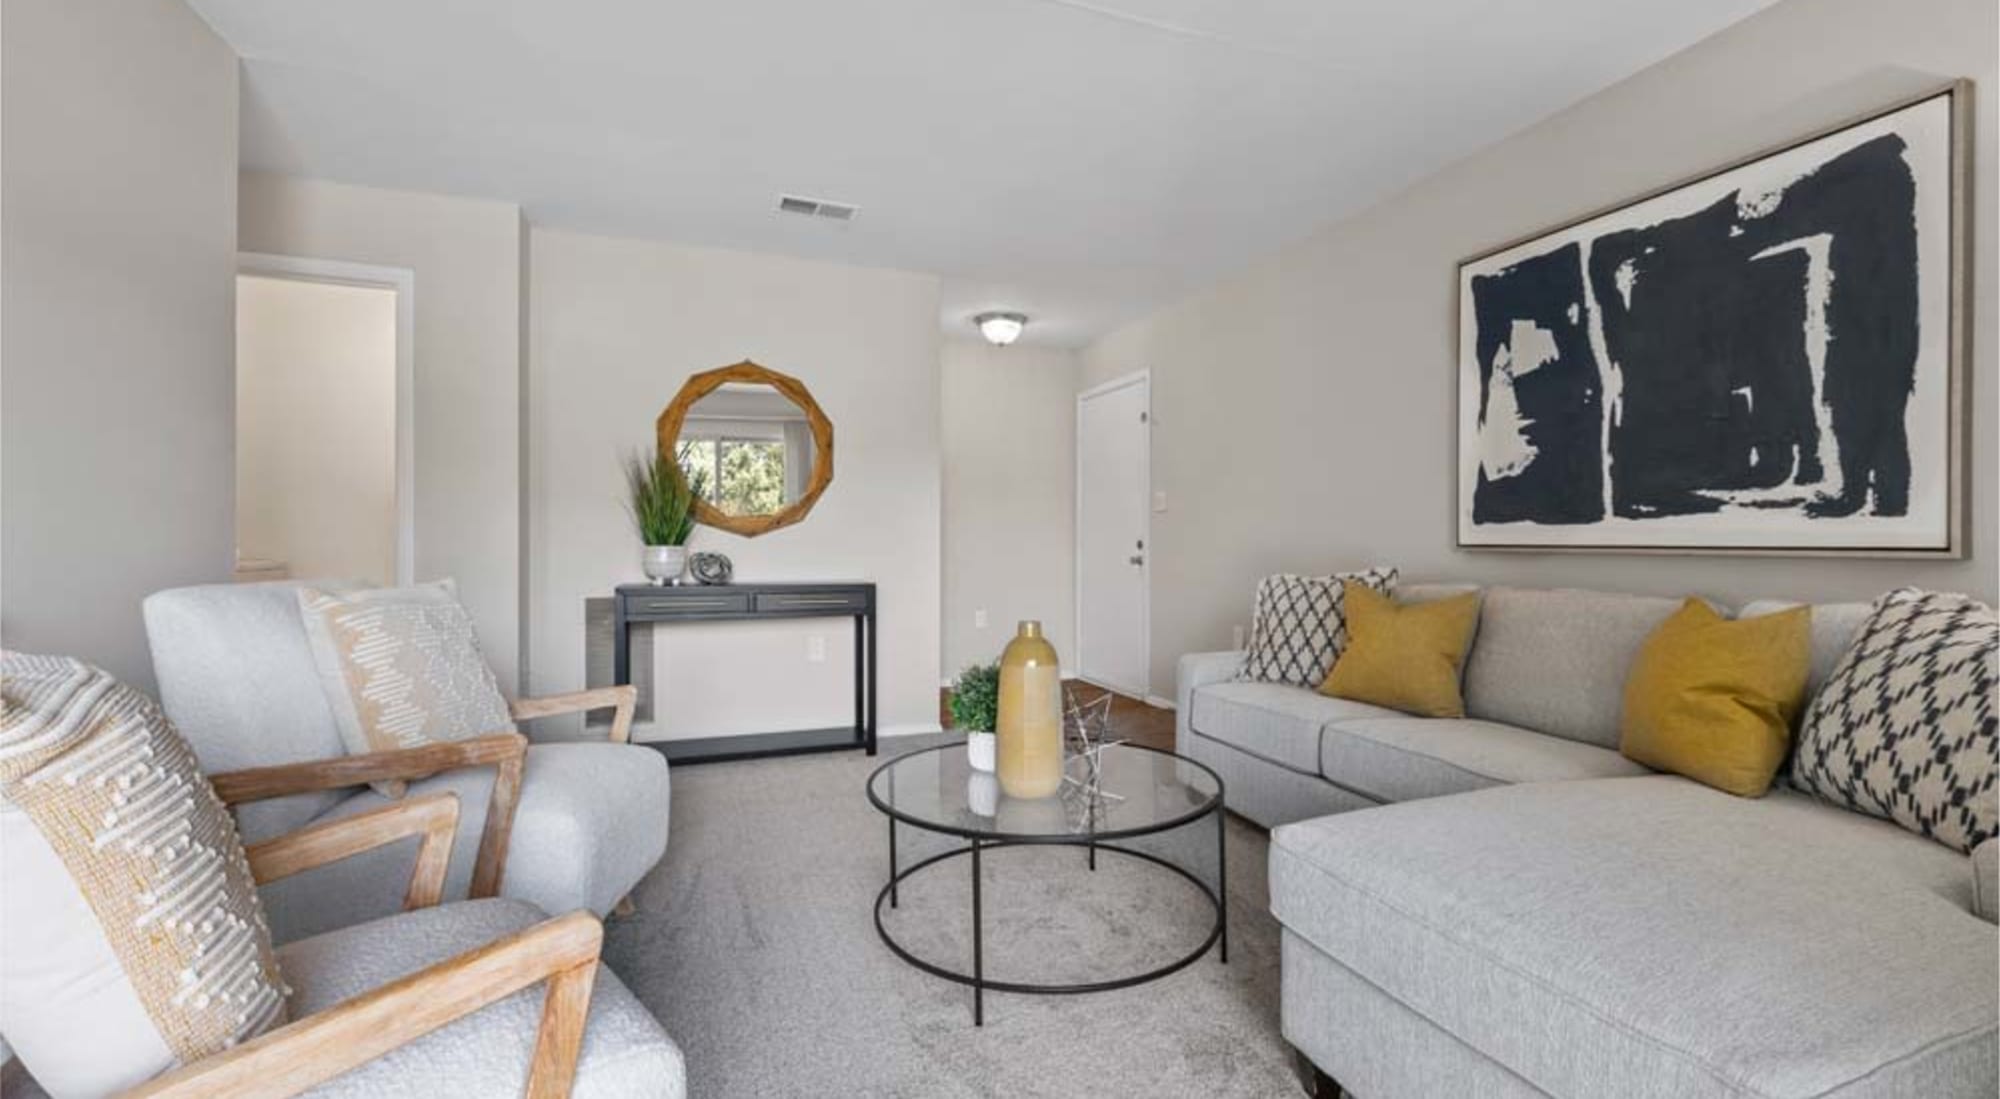 Luxurious model apartment living room at Runaway Bay Apartments in Virginia Beach, Virginia